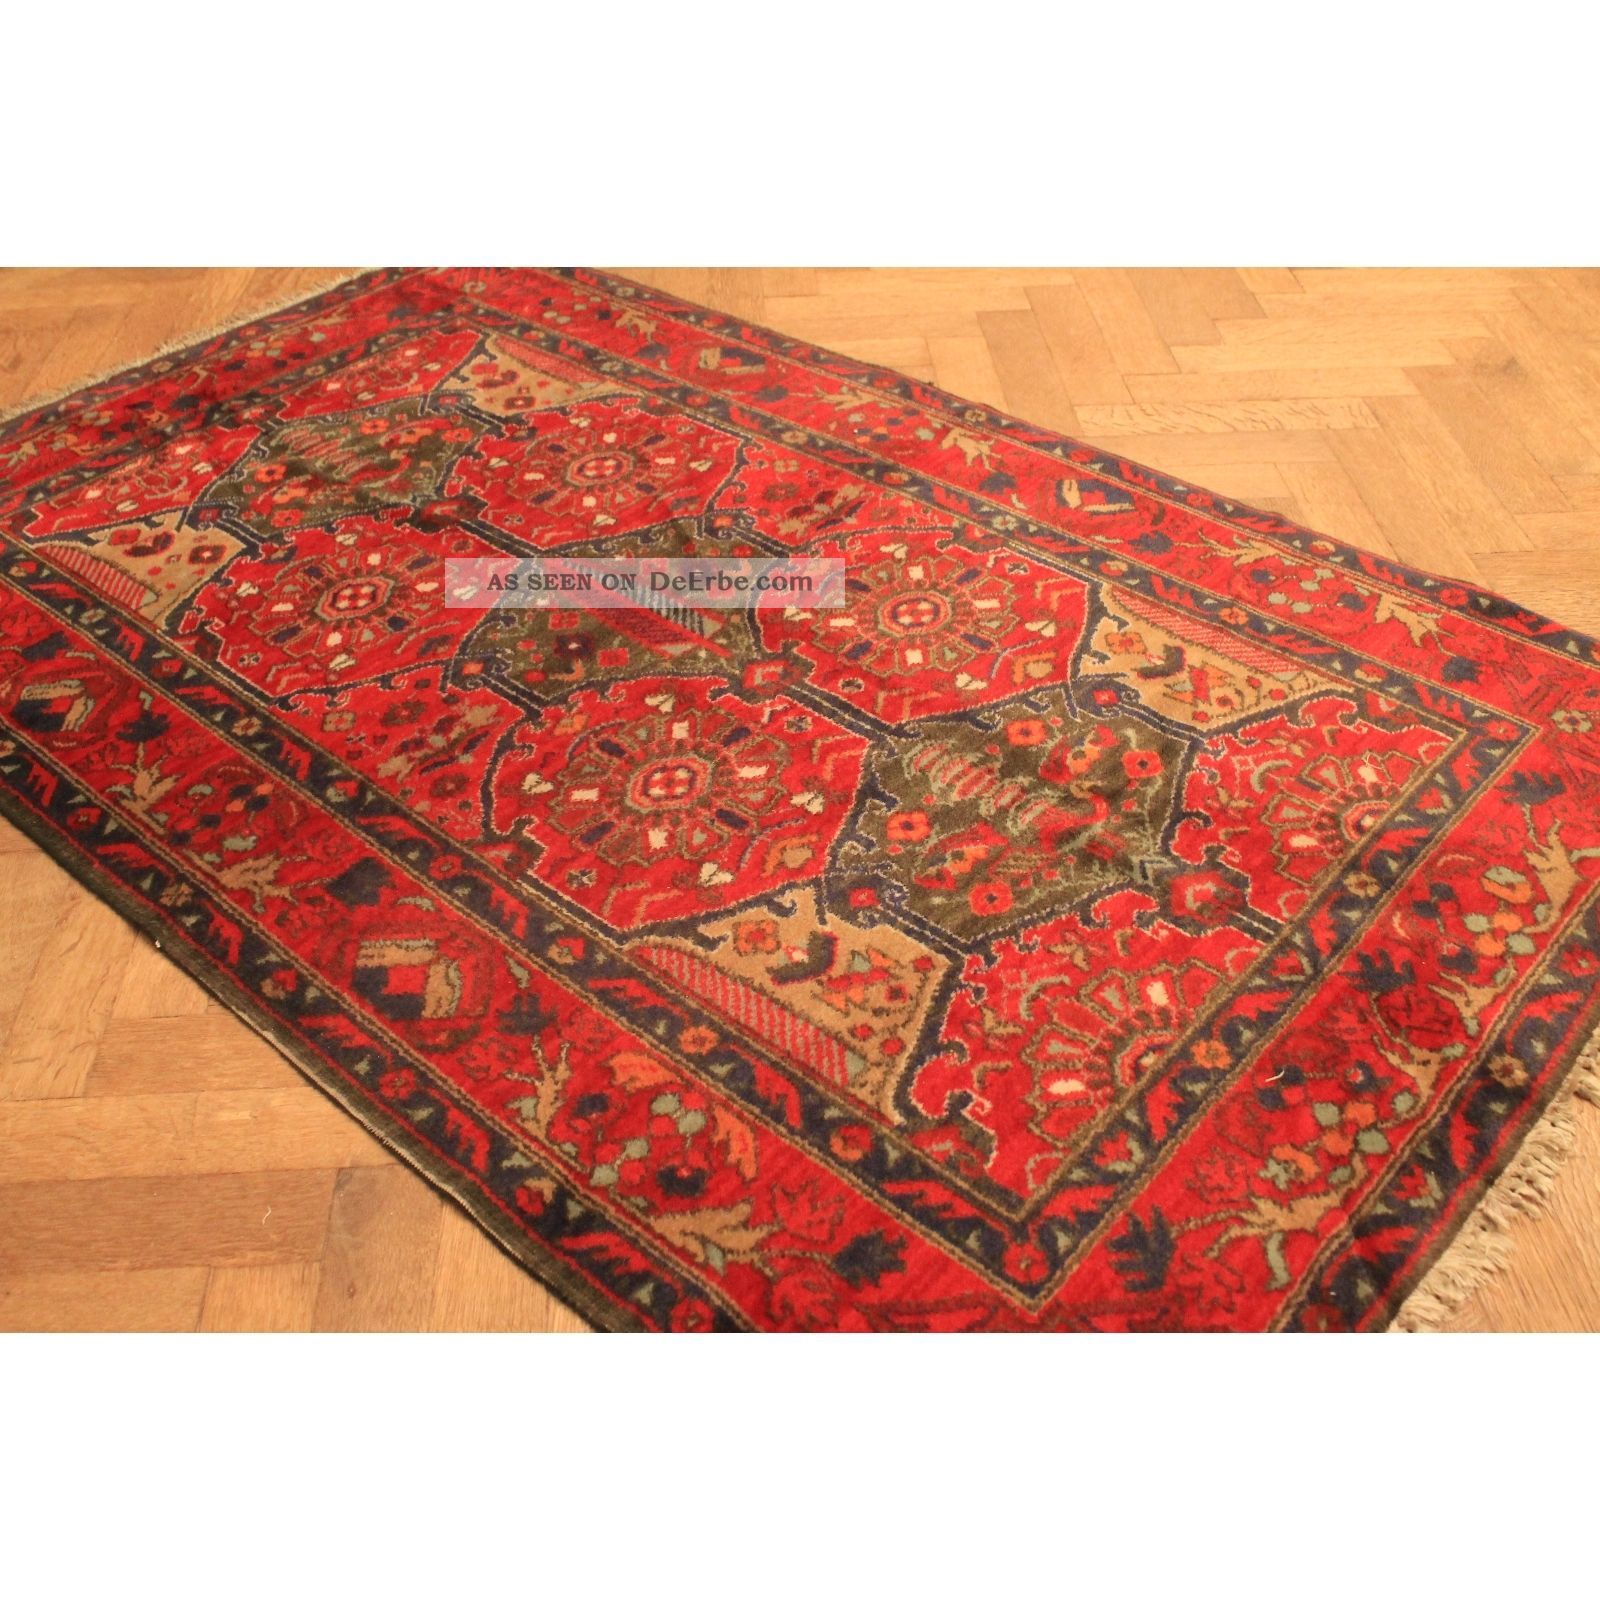 Alter Gewebt Orient Teppich Kazak Bach Tiar Carpet Tappeto Tapis 130x210cm Old Teppiche & Flachgewebe Bild